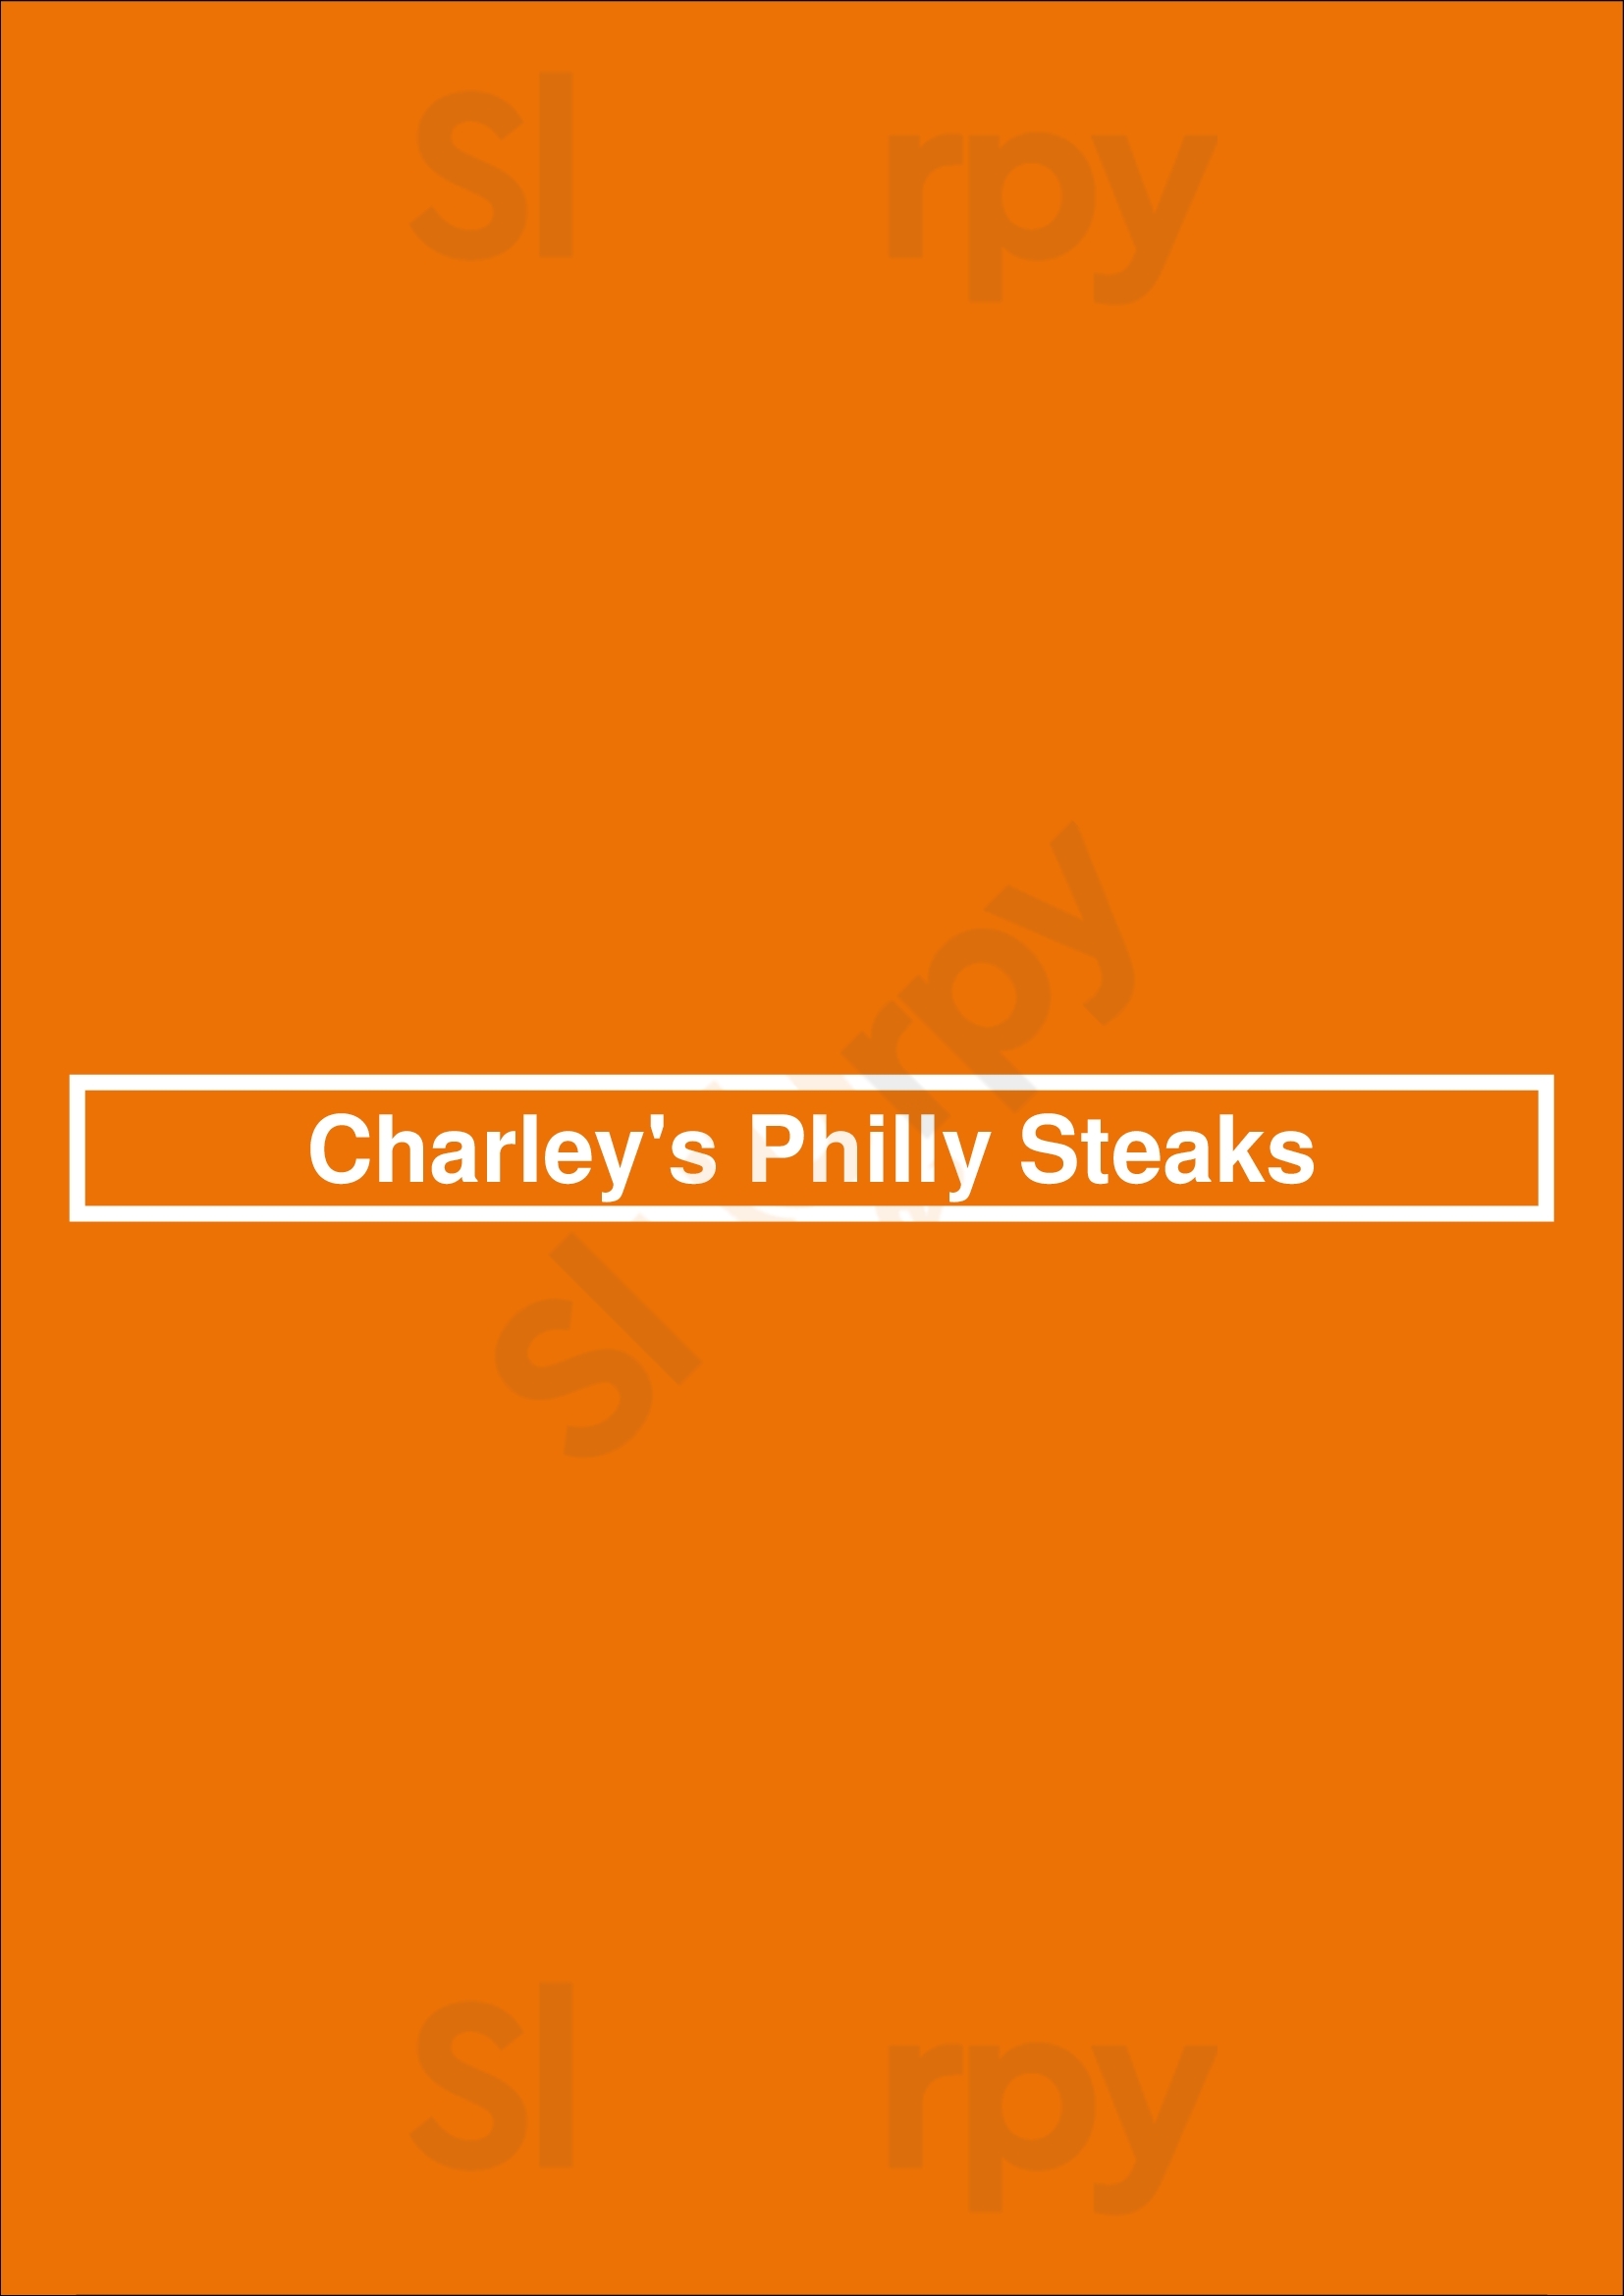 Charleys Philly Steaks Indianapolis Menu - 1